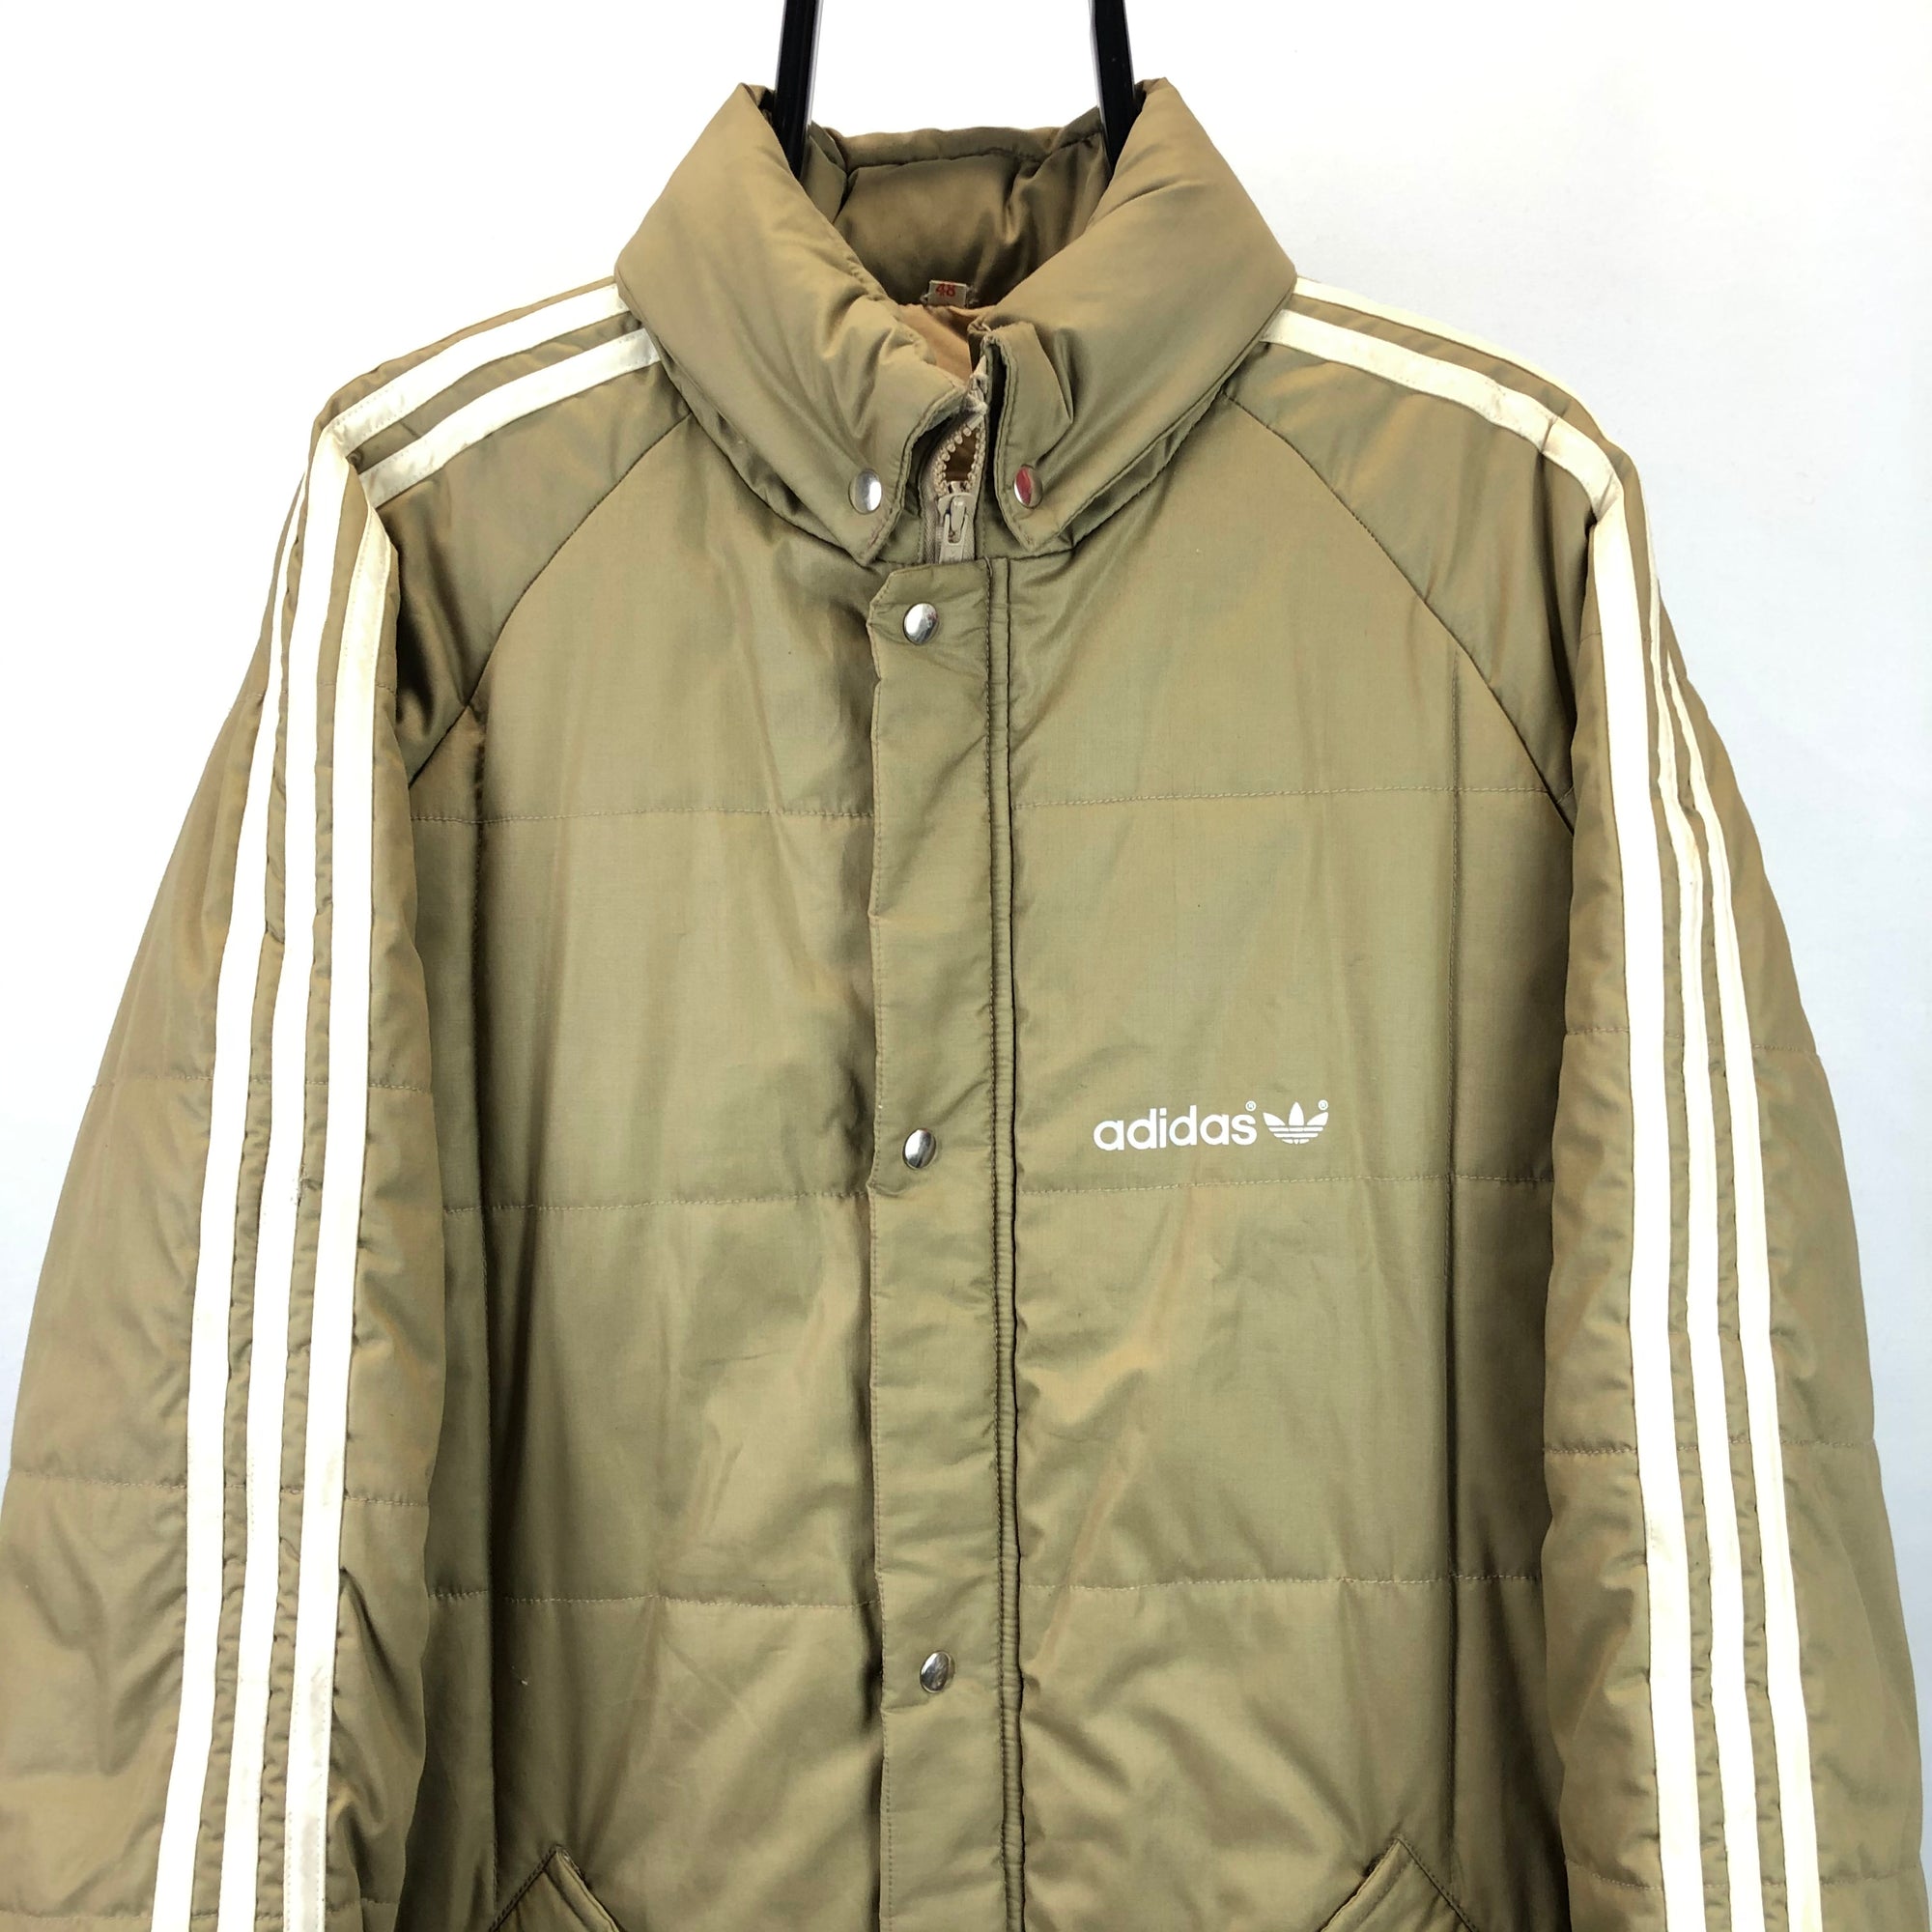 Vintage Adidas Long Puffer Jacket in Brown/Beige - Men's Large/Women's XL